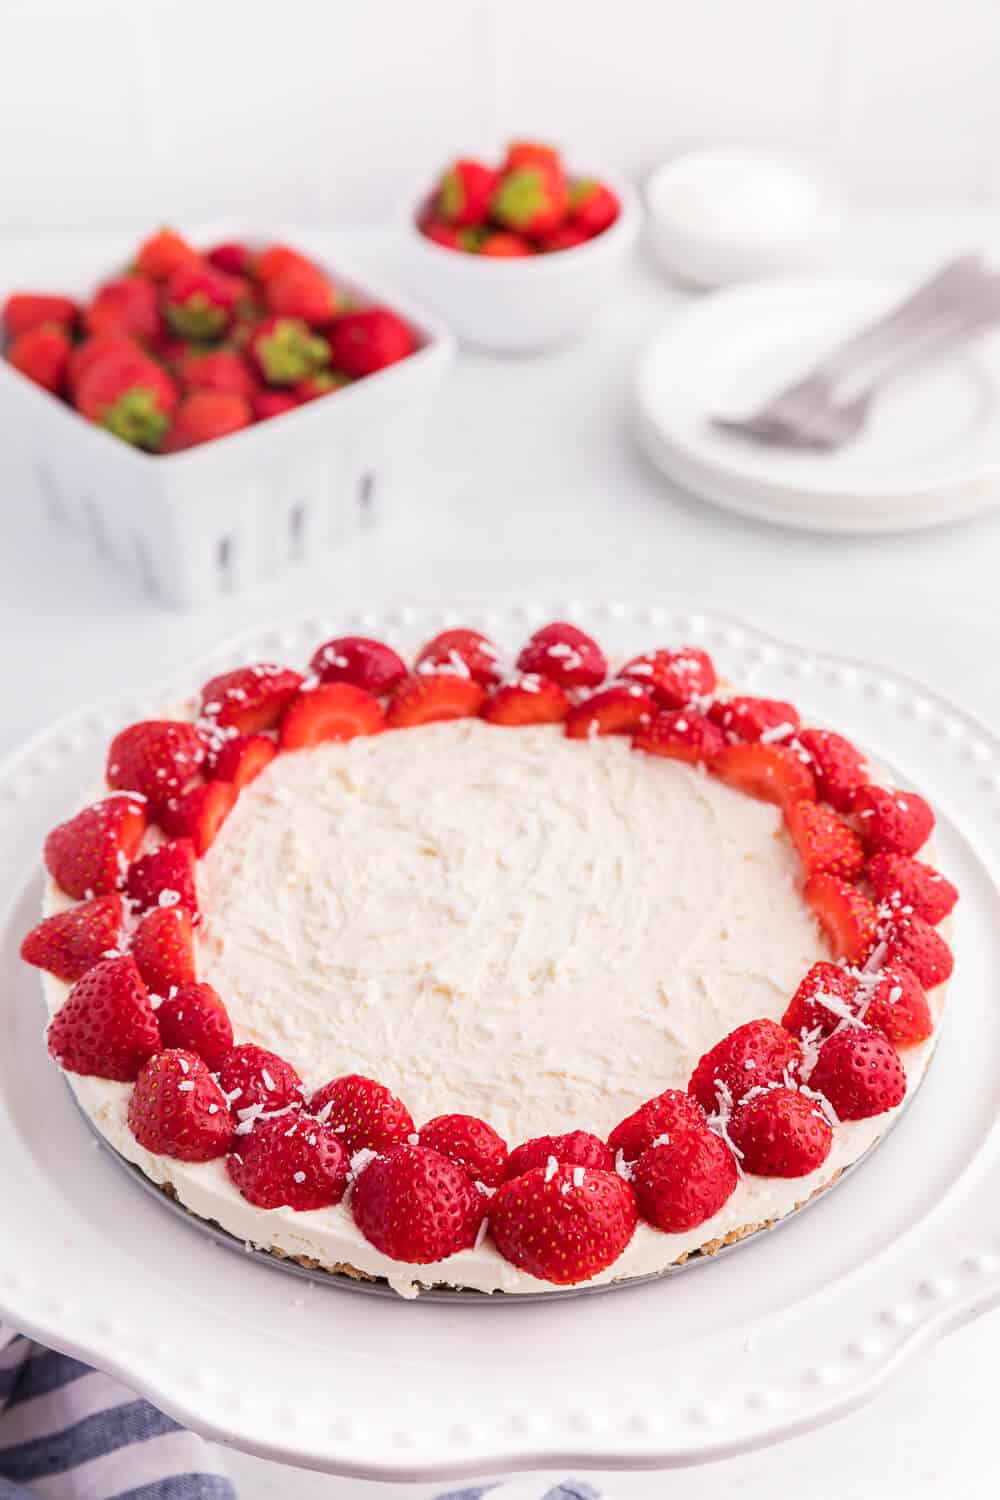 A whole no-bake strawberry cheesecake